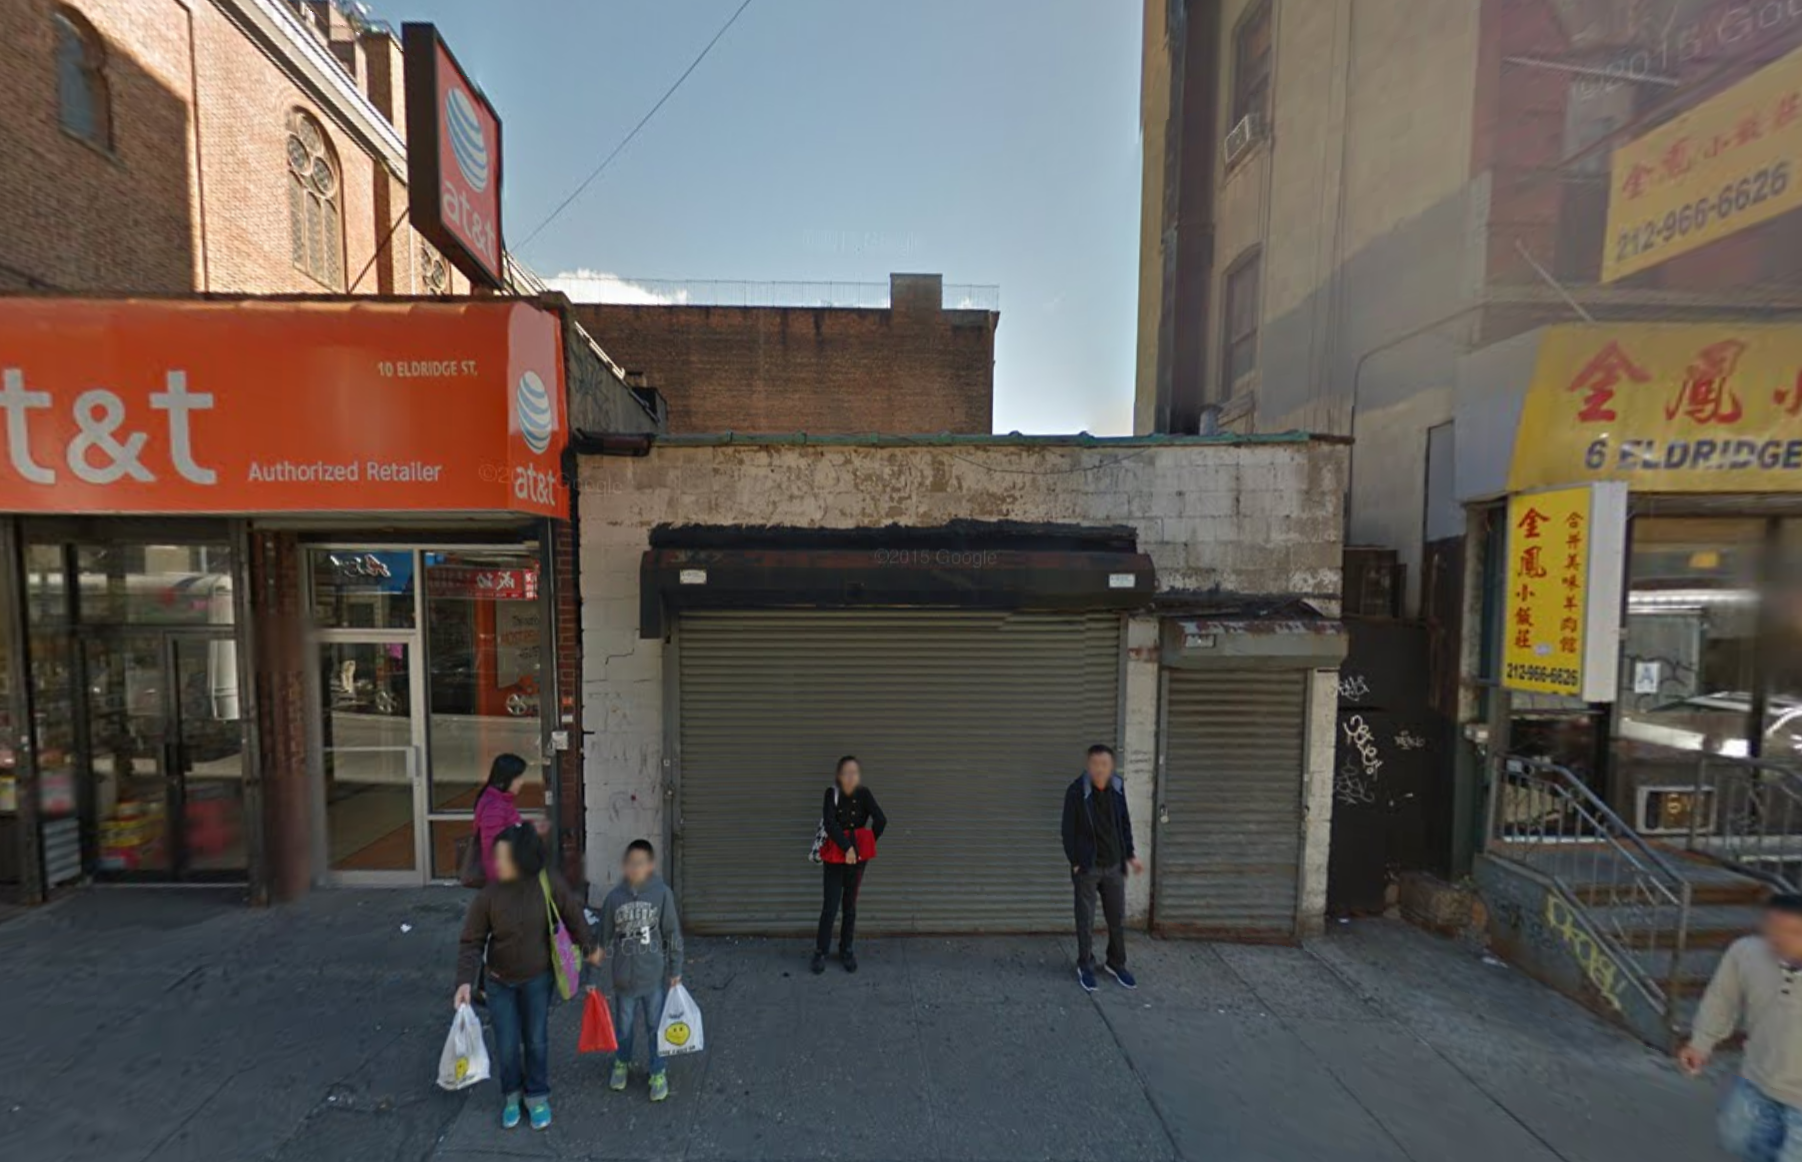 10 Eldridge Street, image via Google Maps